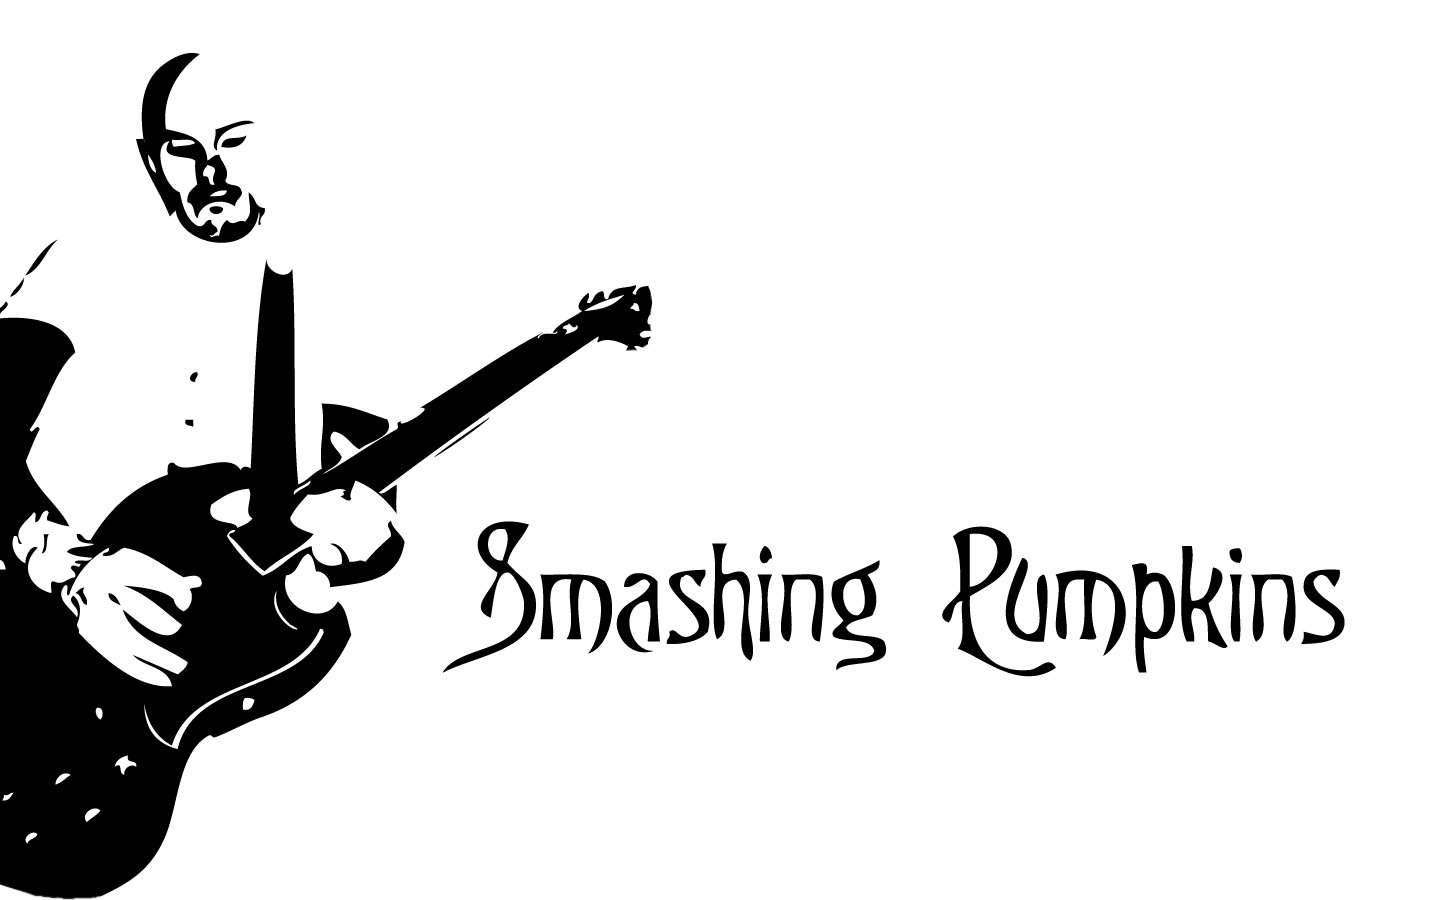 Smashing Pumpkins Wallpaper by LynchMob10 09 on DeviantArt